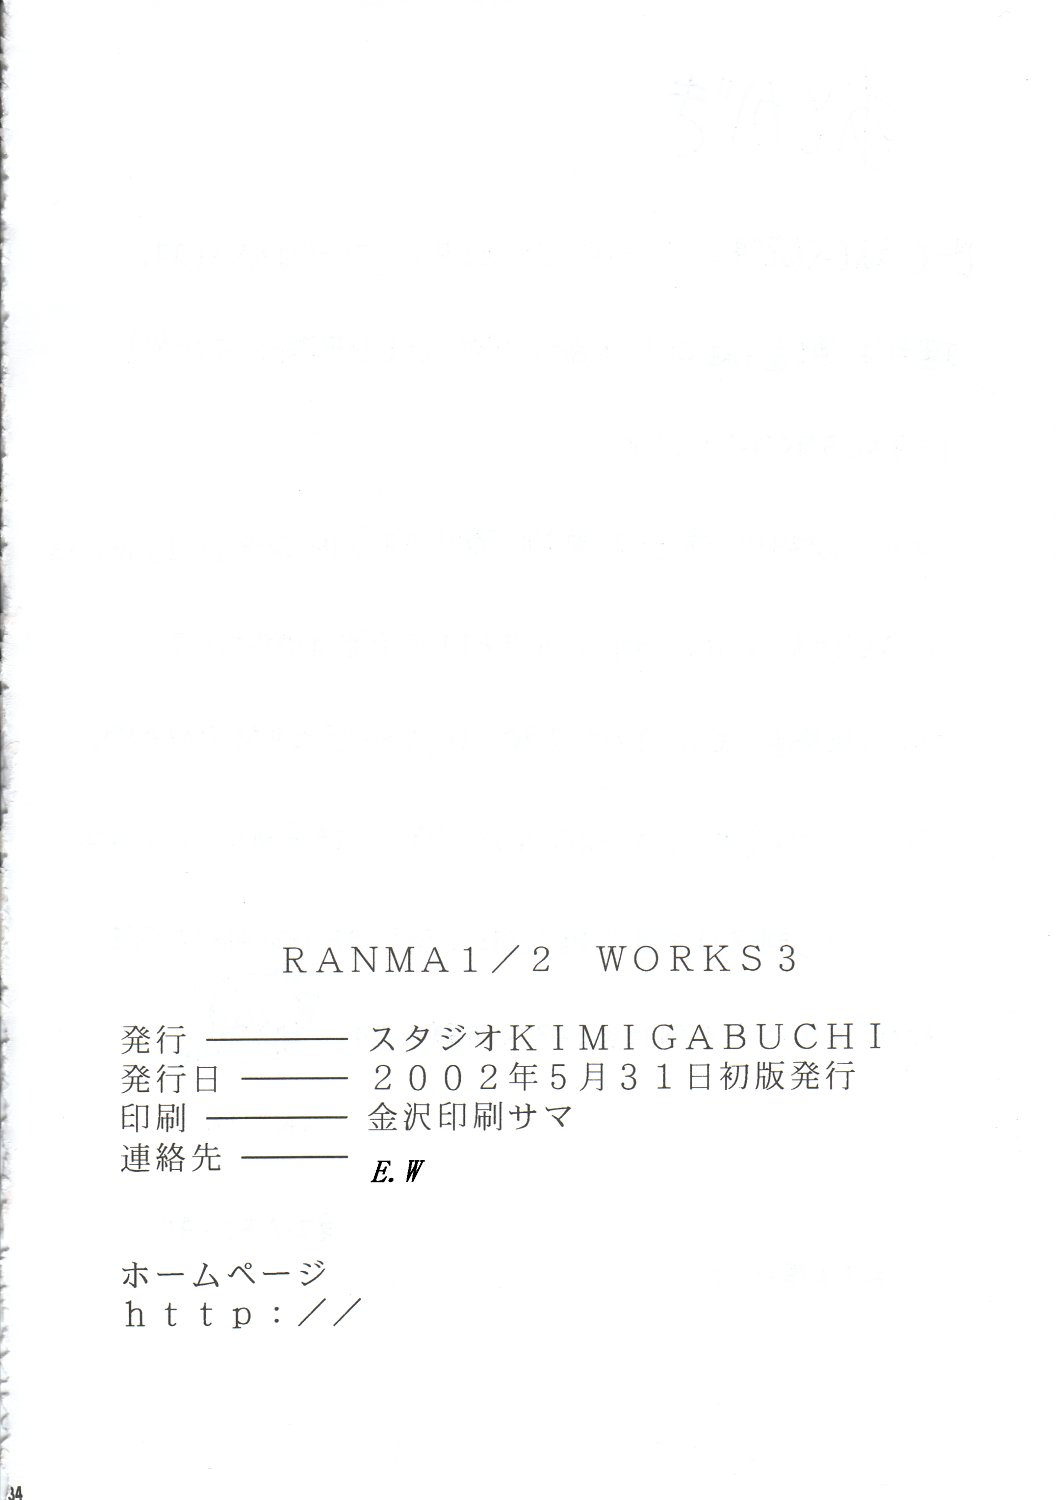 [Kimigabuchi] Works 3 (ranma) 